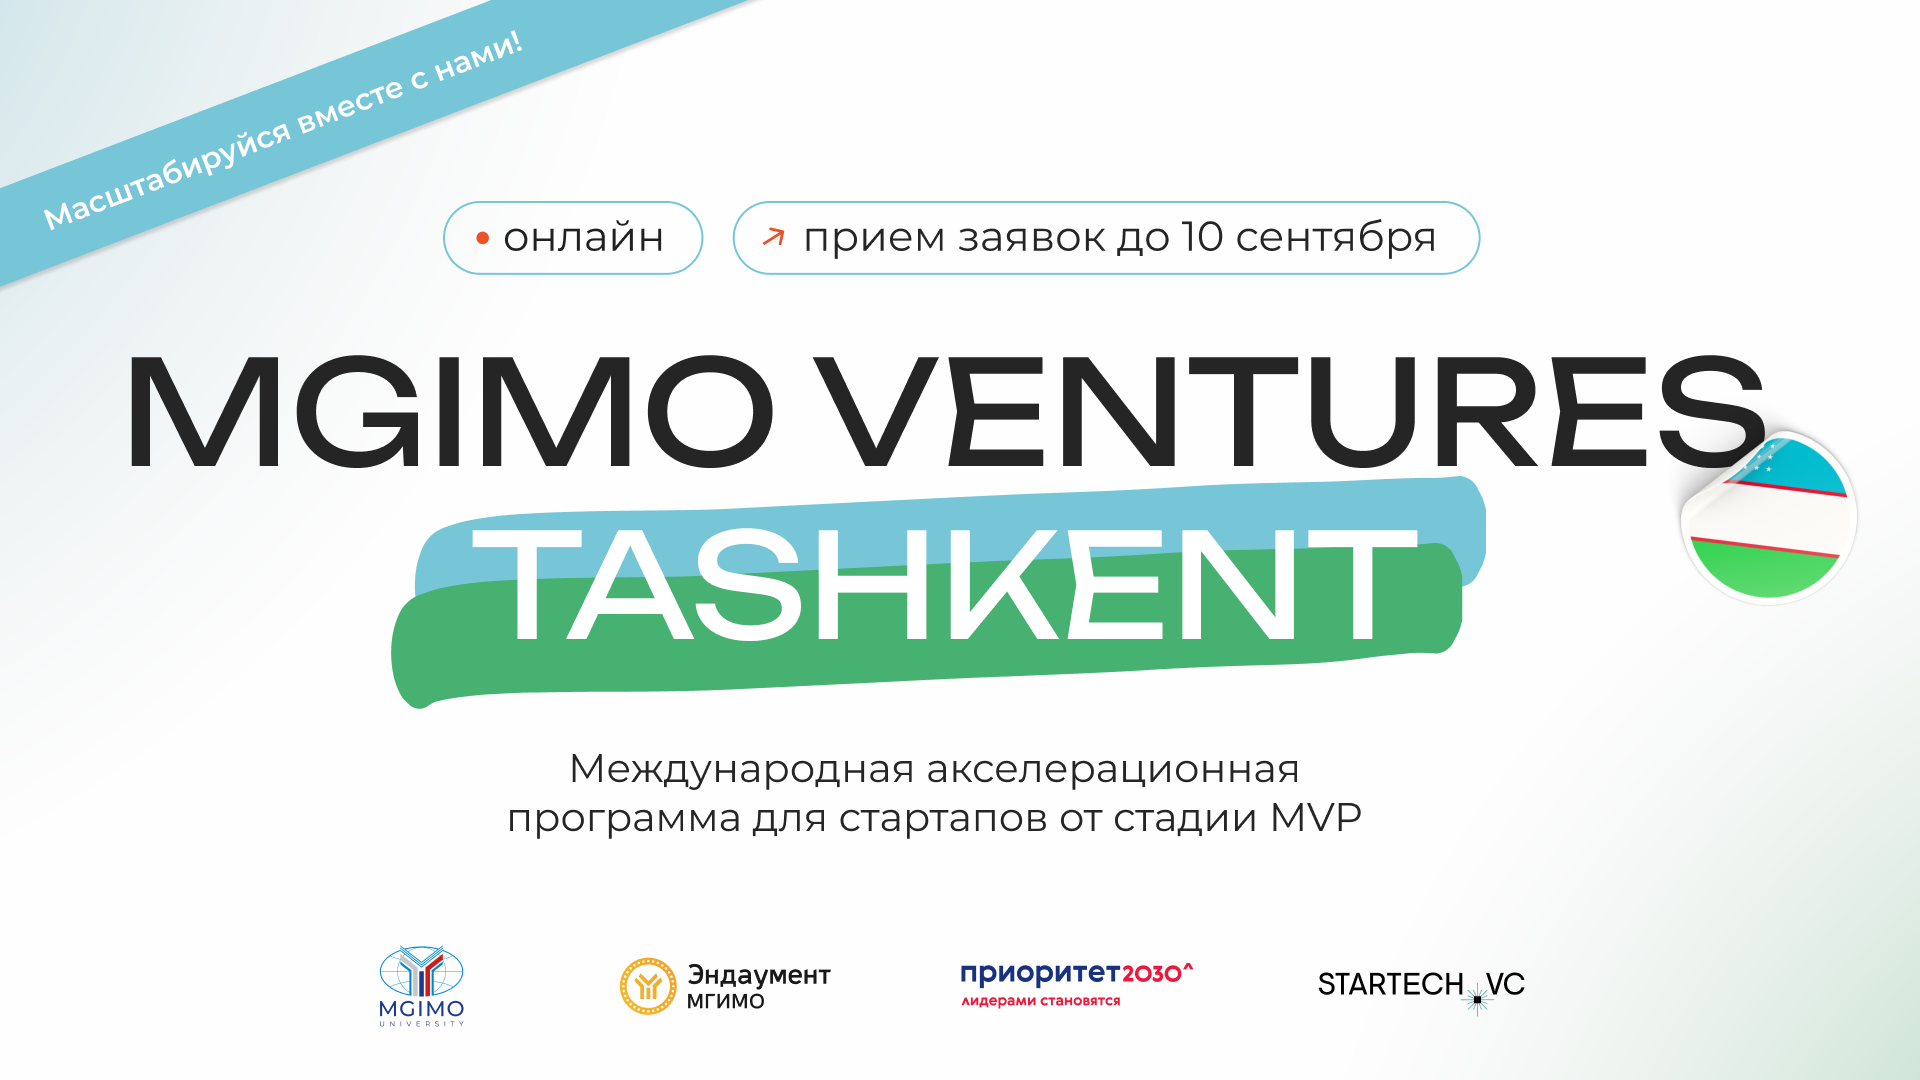 MGIMO Ventures Tashkent international accelerator enrollment is open